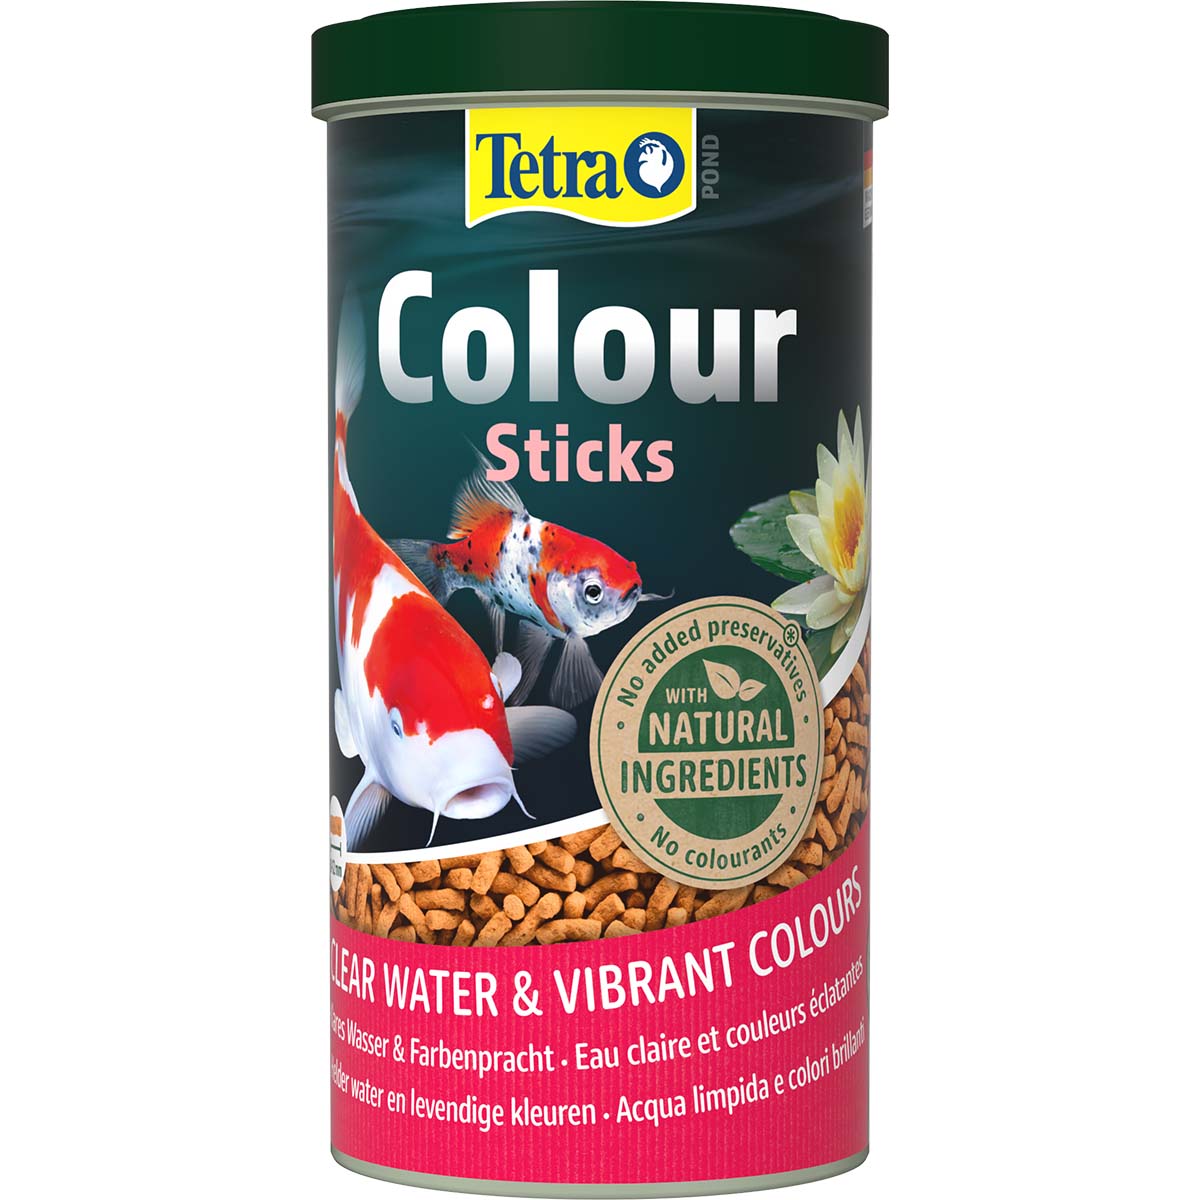 Levně Tetra Pond Colour Sticks 1 l